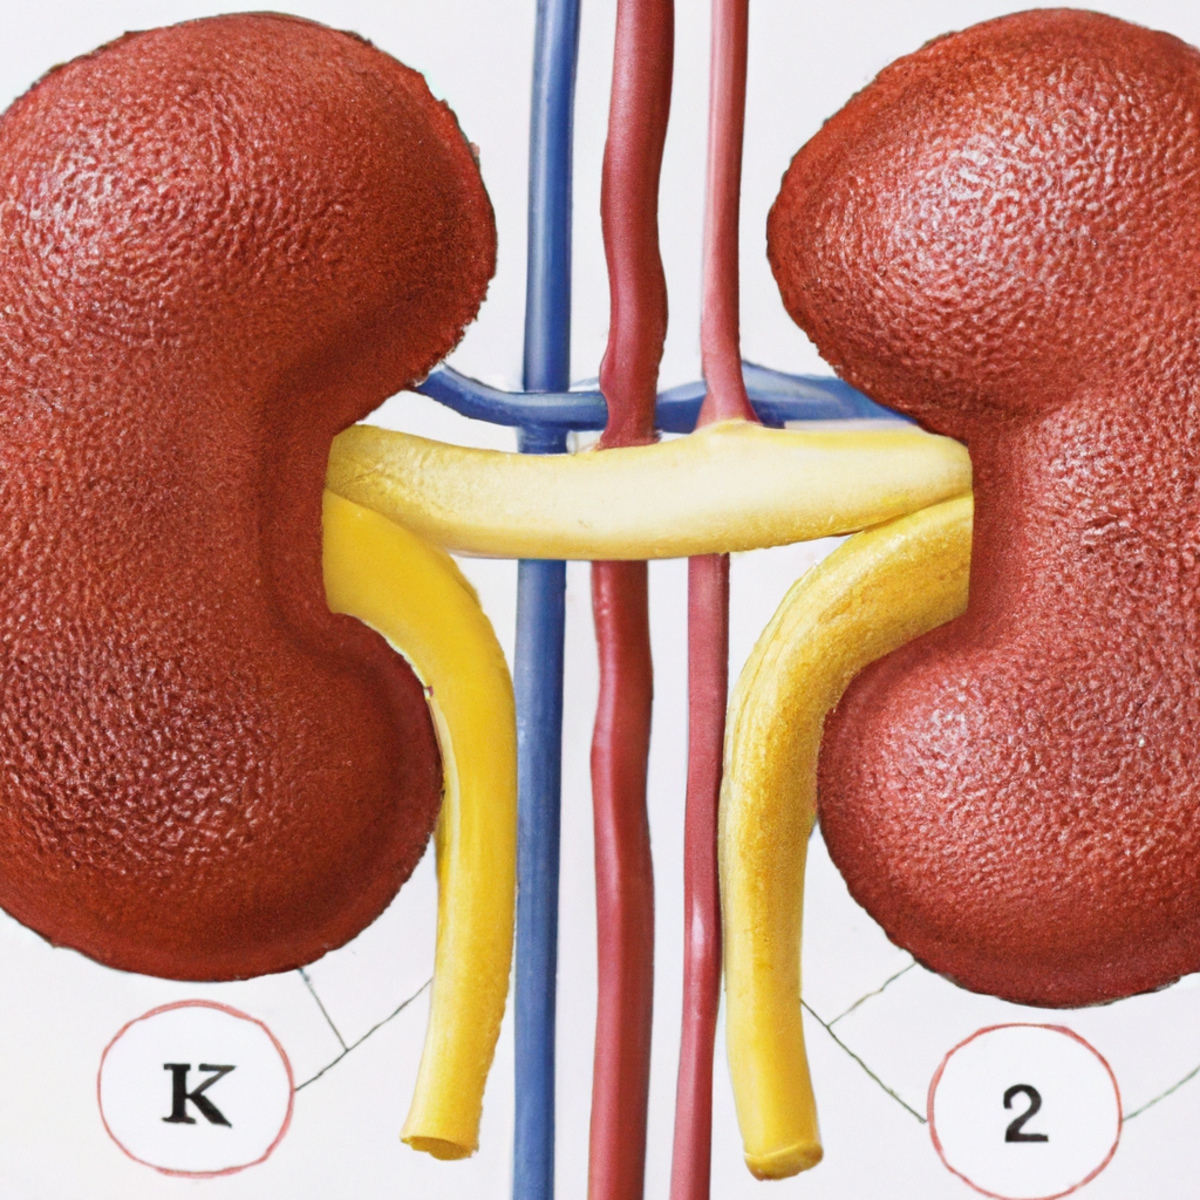 Dent Disease: Close-up of kidney model or medical illustration showcasing unique characteristics.